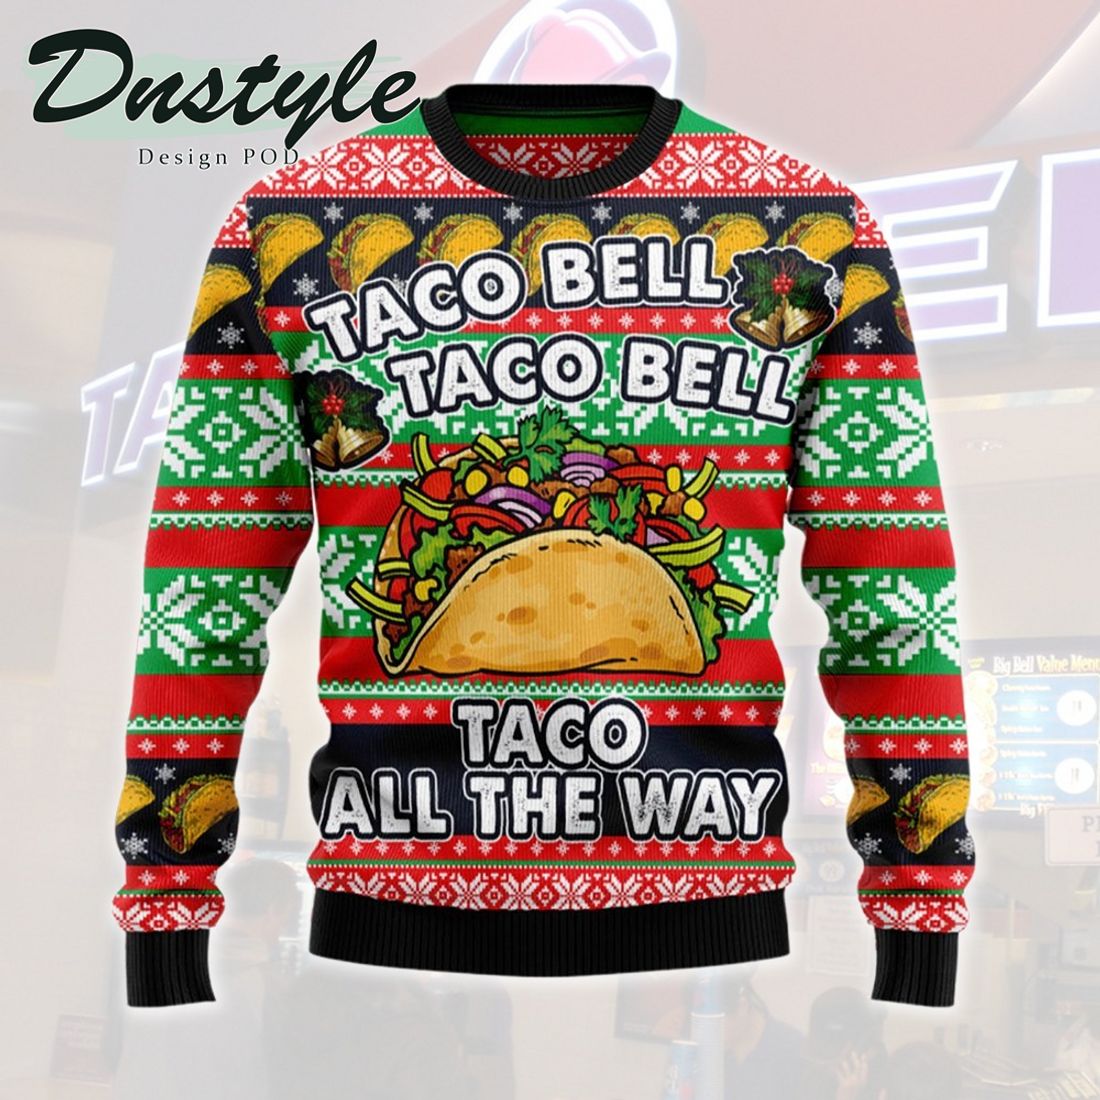 Taco Bell Jingle Bells Taco Shells Ugly Christmas Sweater